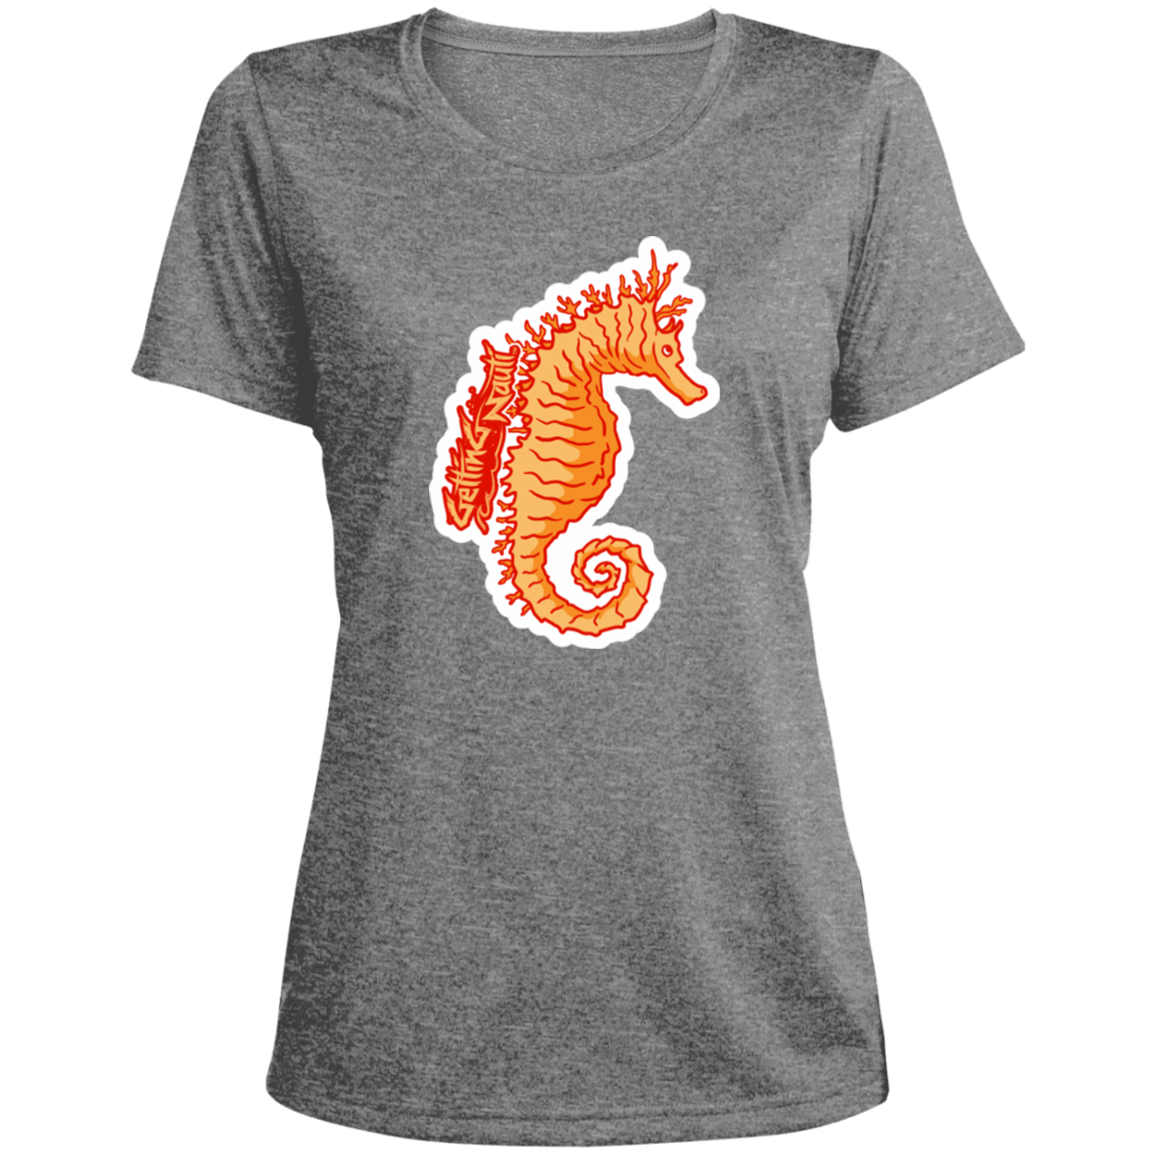 Retro Seahorse - Ladies' Performance T-Shirt